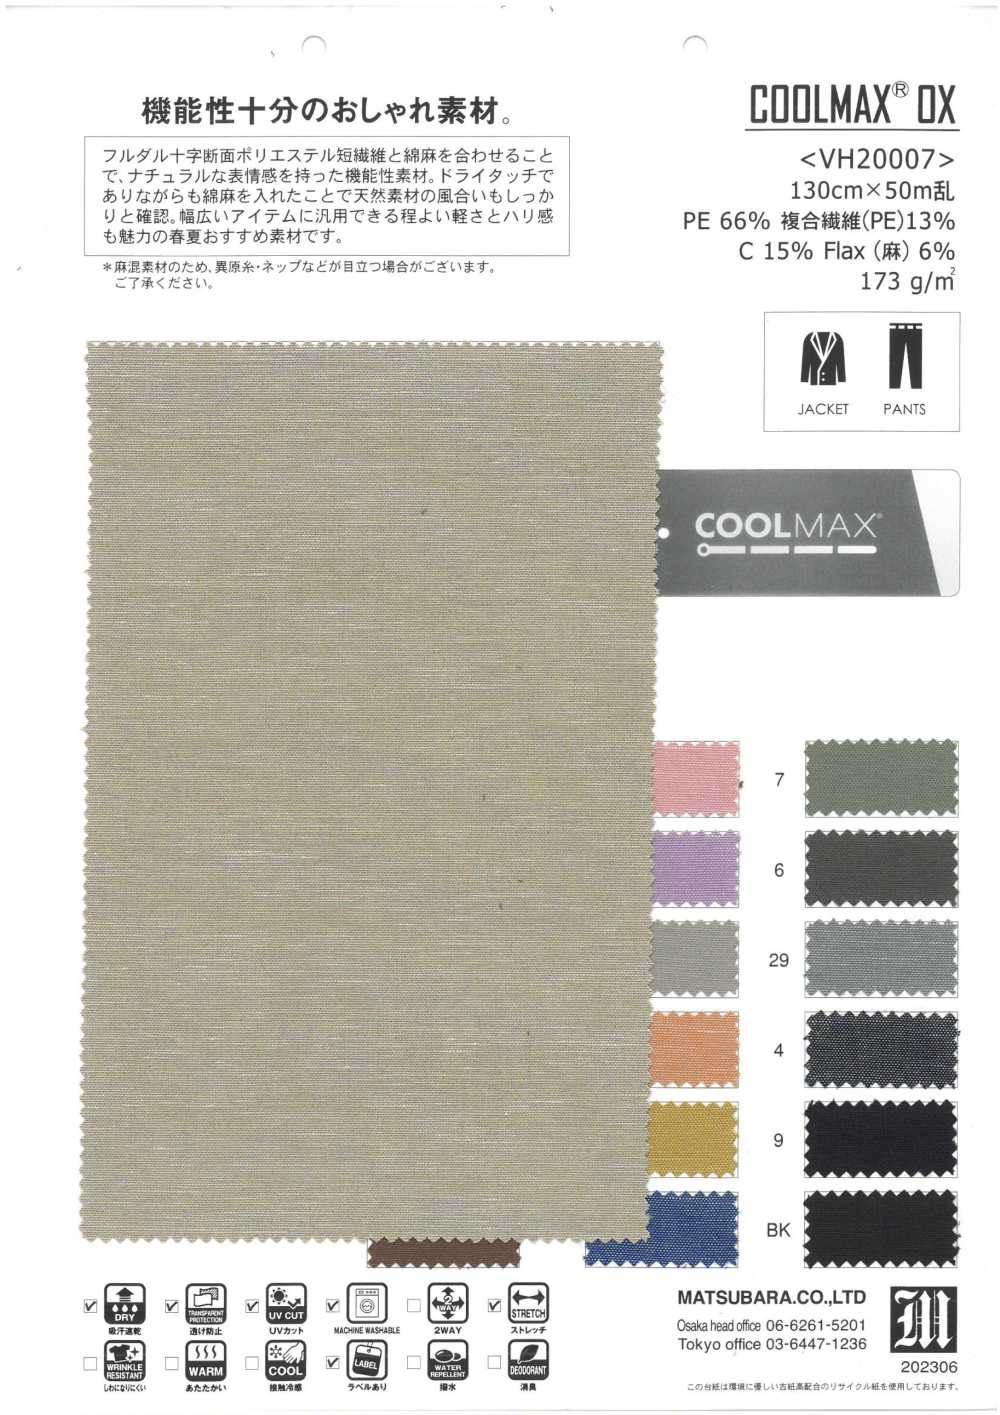 VH20007 COOLMAX® OX[Textilgewebe] Matsubara